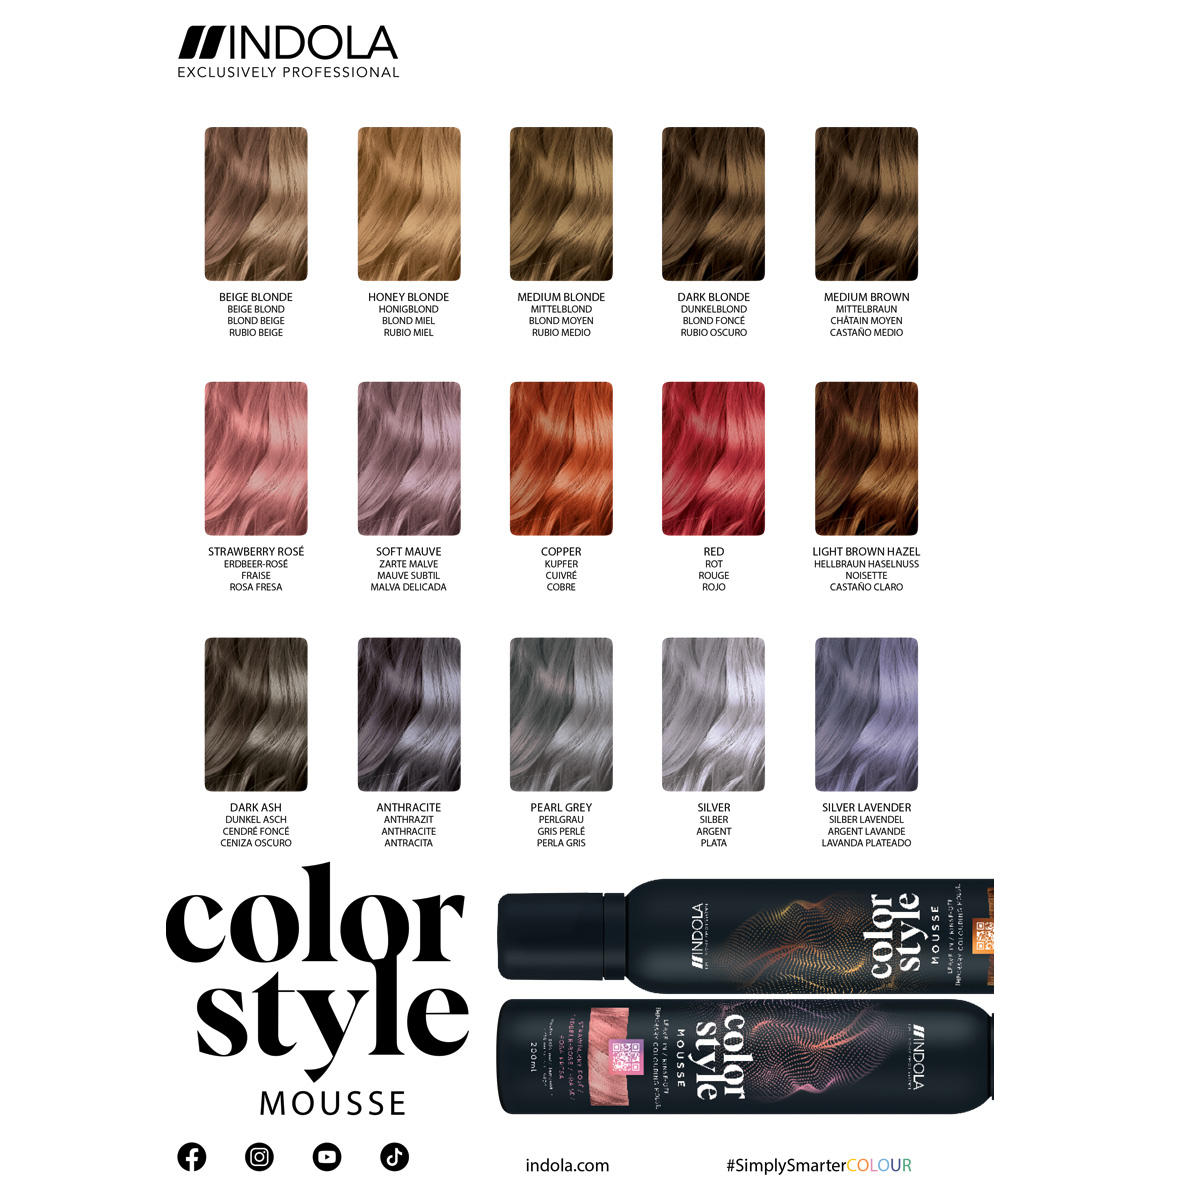 Indola Color Style Mousse kleurenkaart  - 1